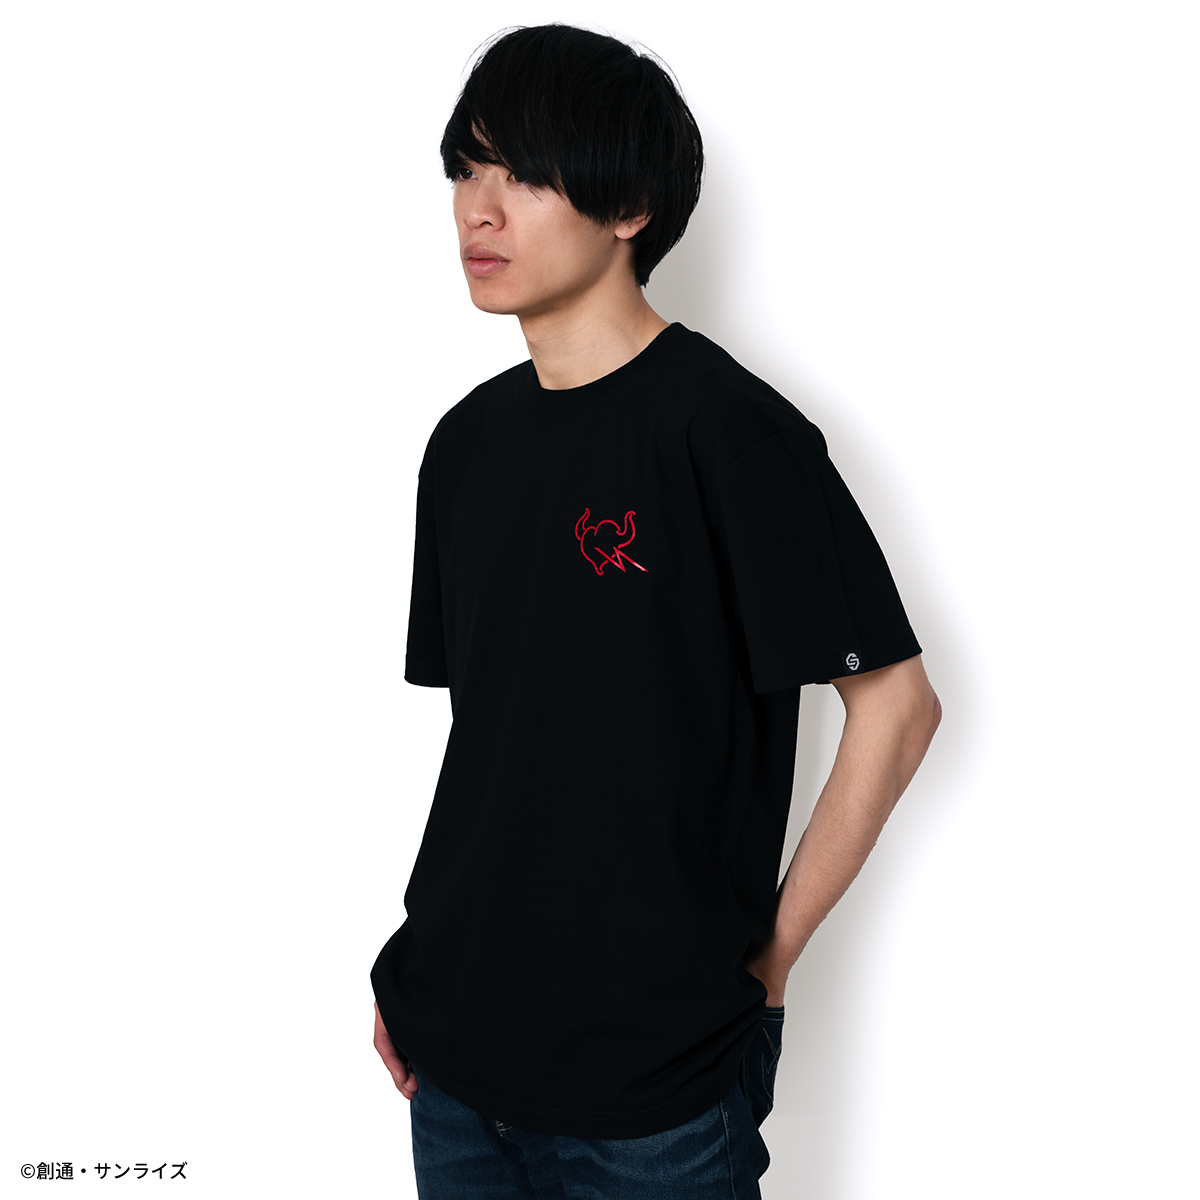 STRICT-G×TAMASHII NATIONS『機動戦士ガンダムSEED FREEDOM』半袖Tシャツ